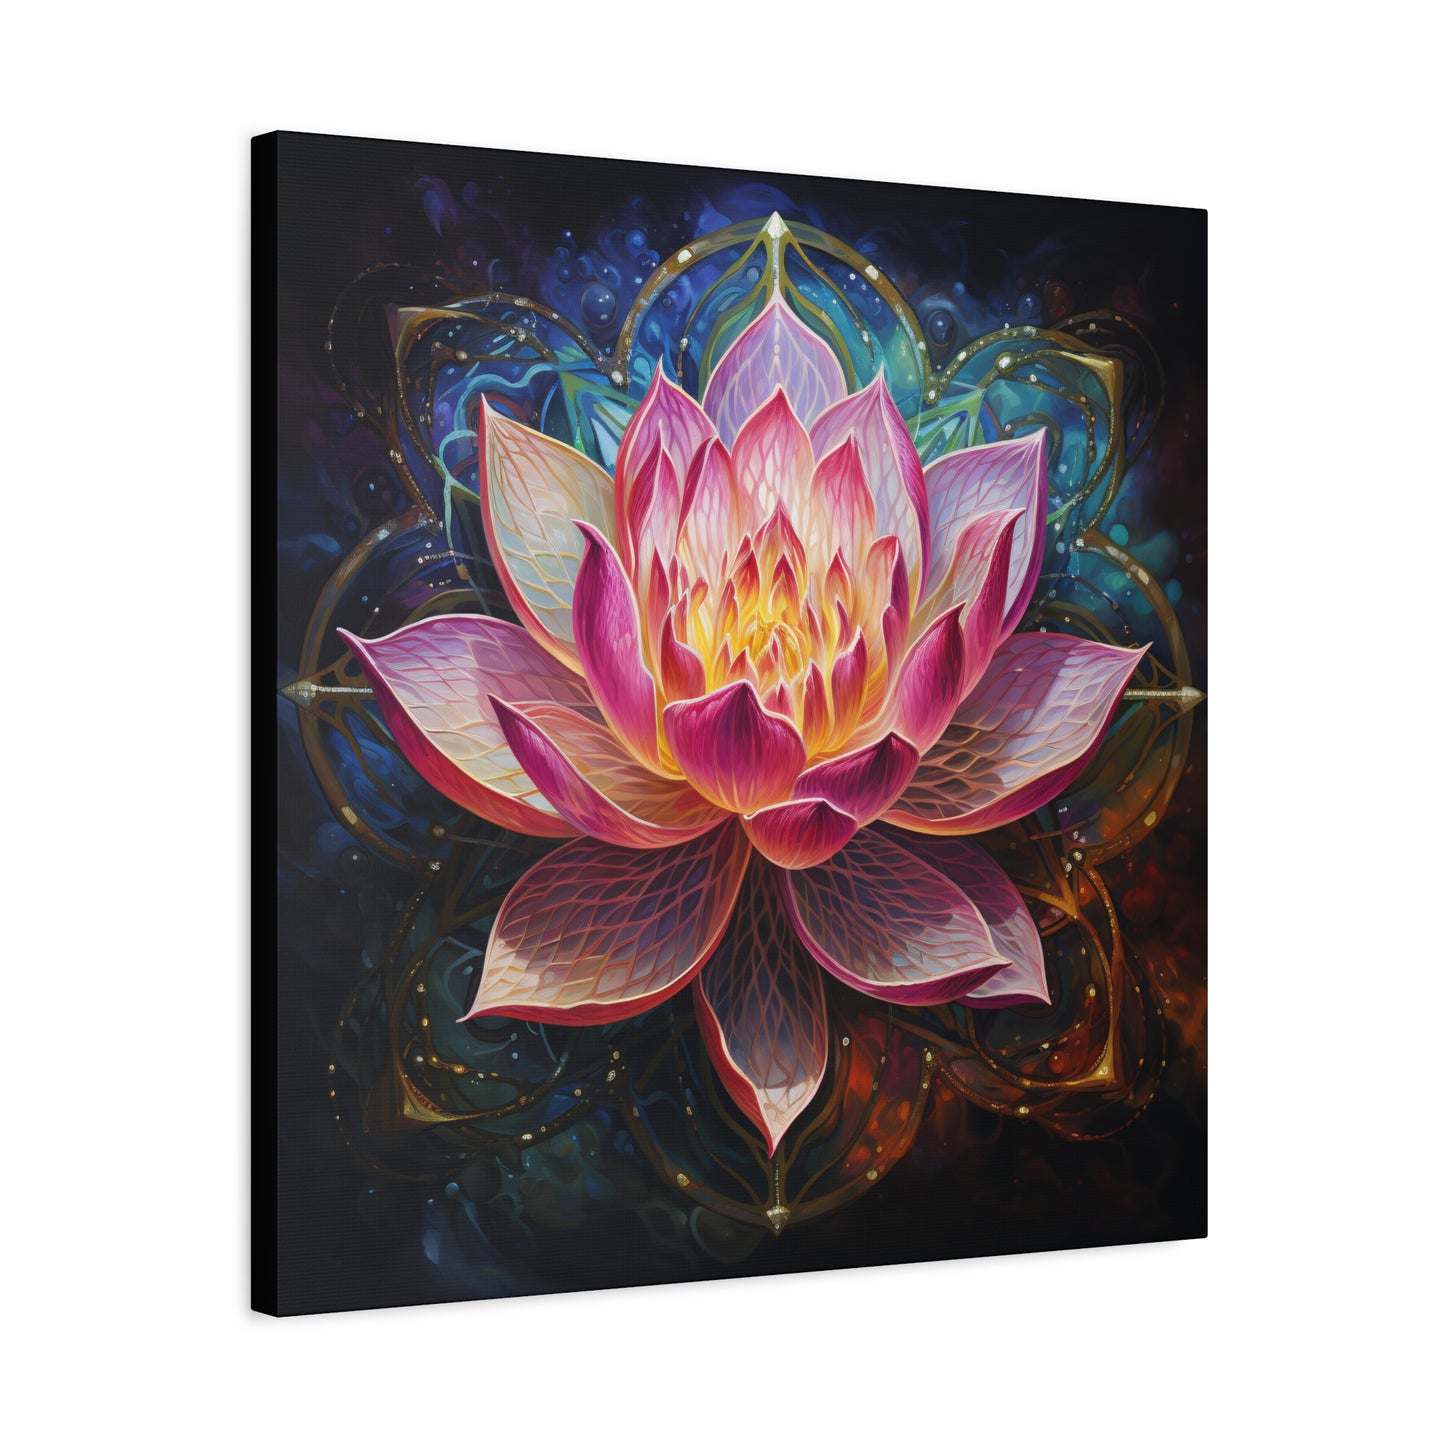 Lotus - Light codes art